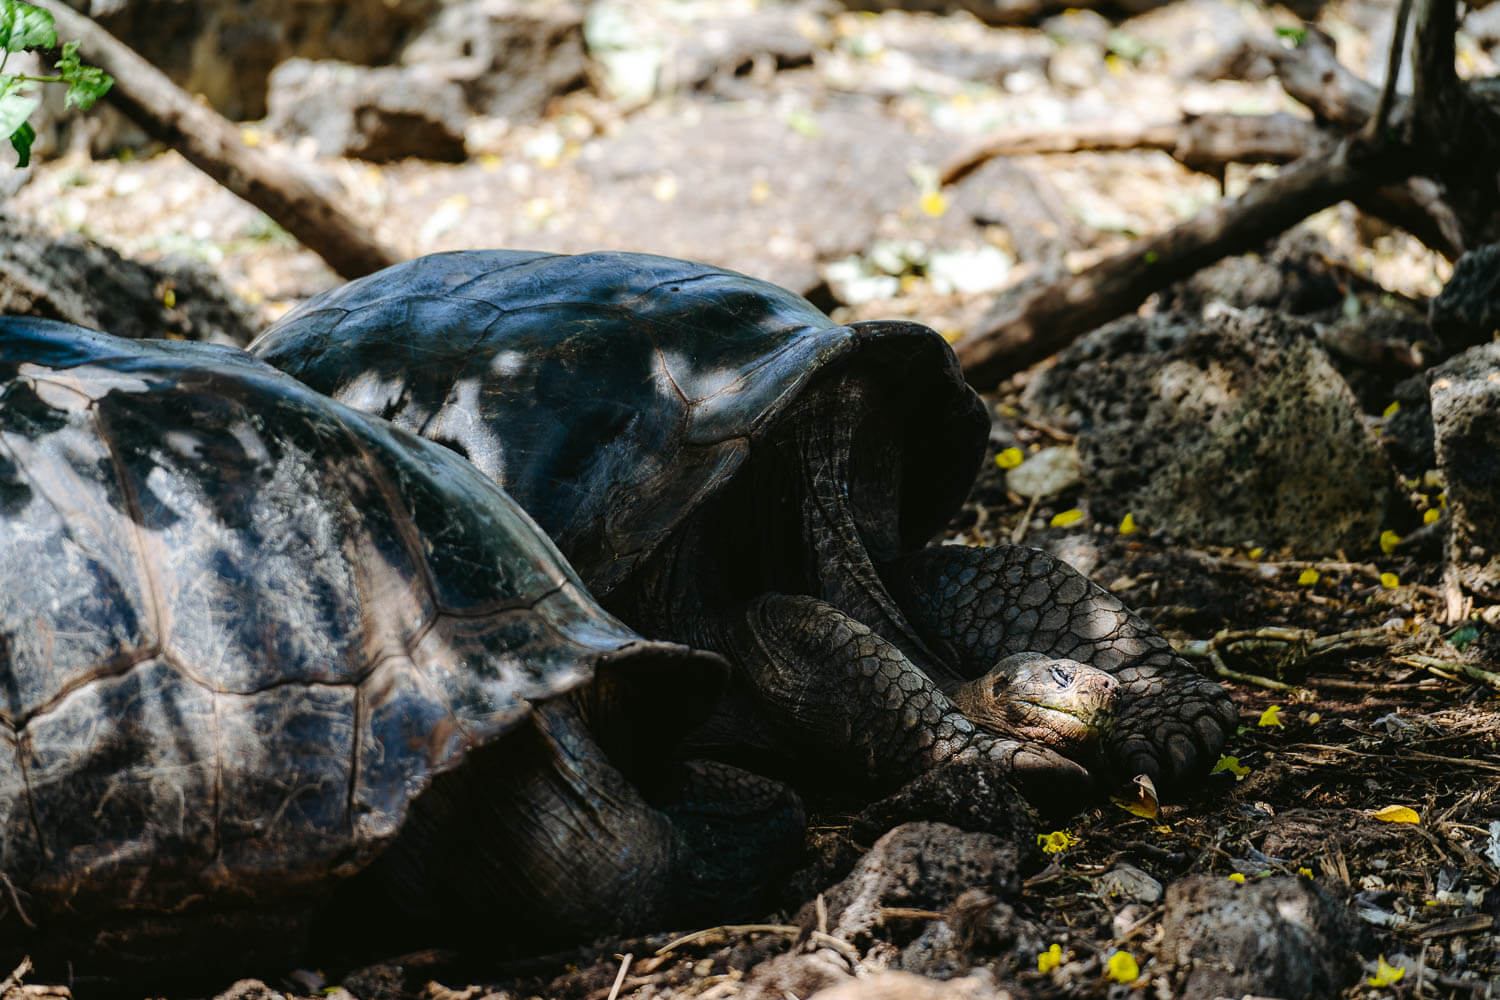 More sleeping giant tortoises